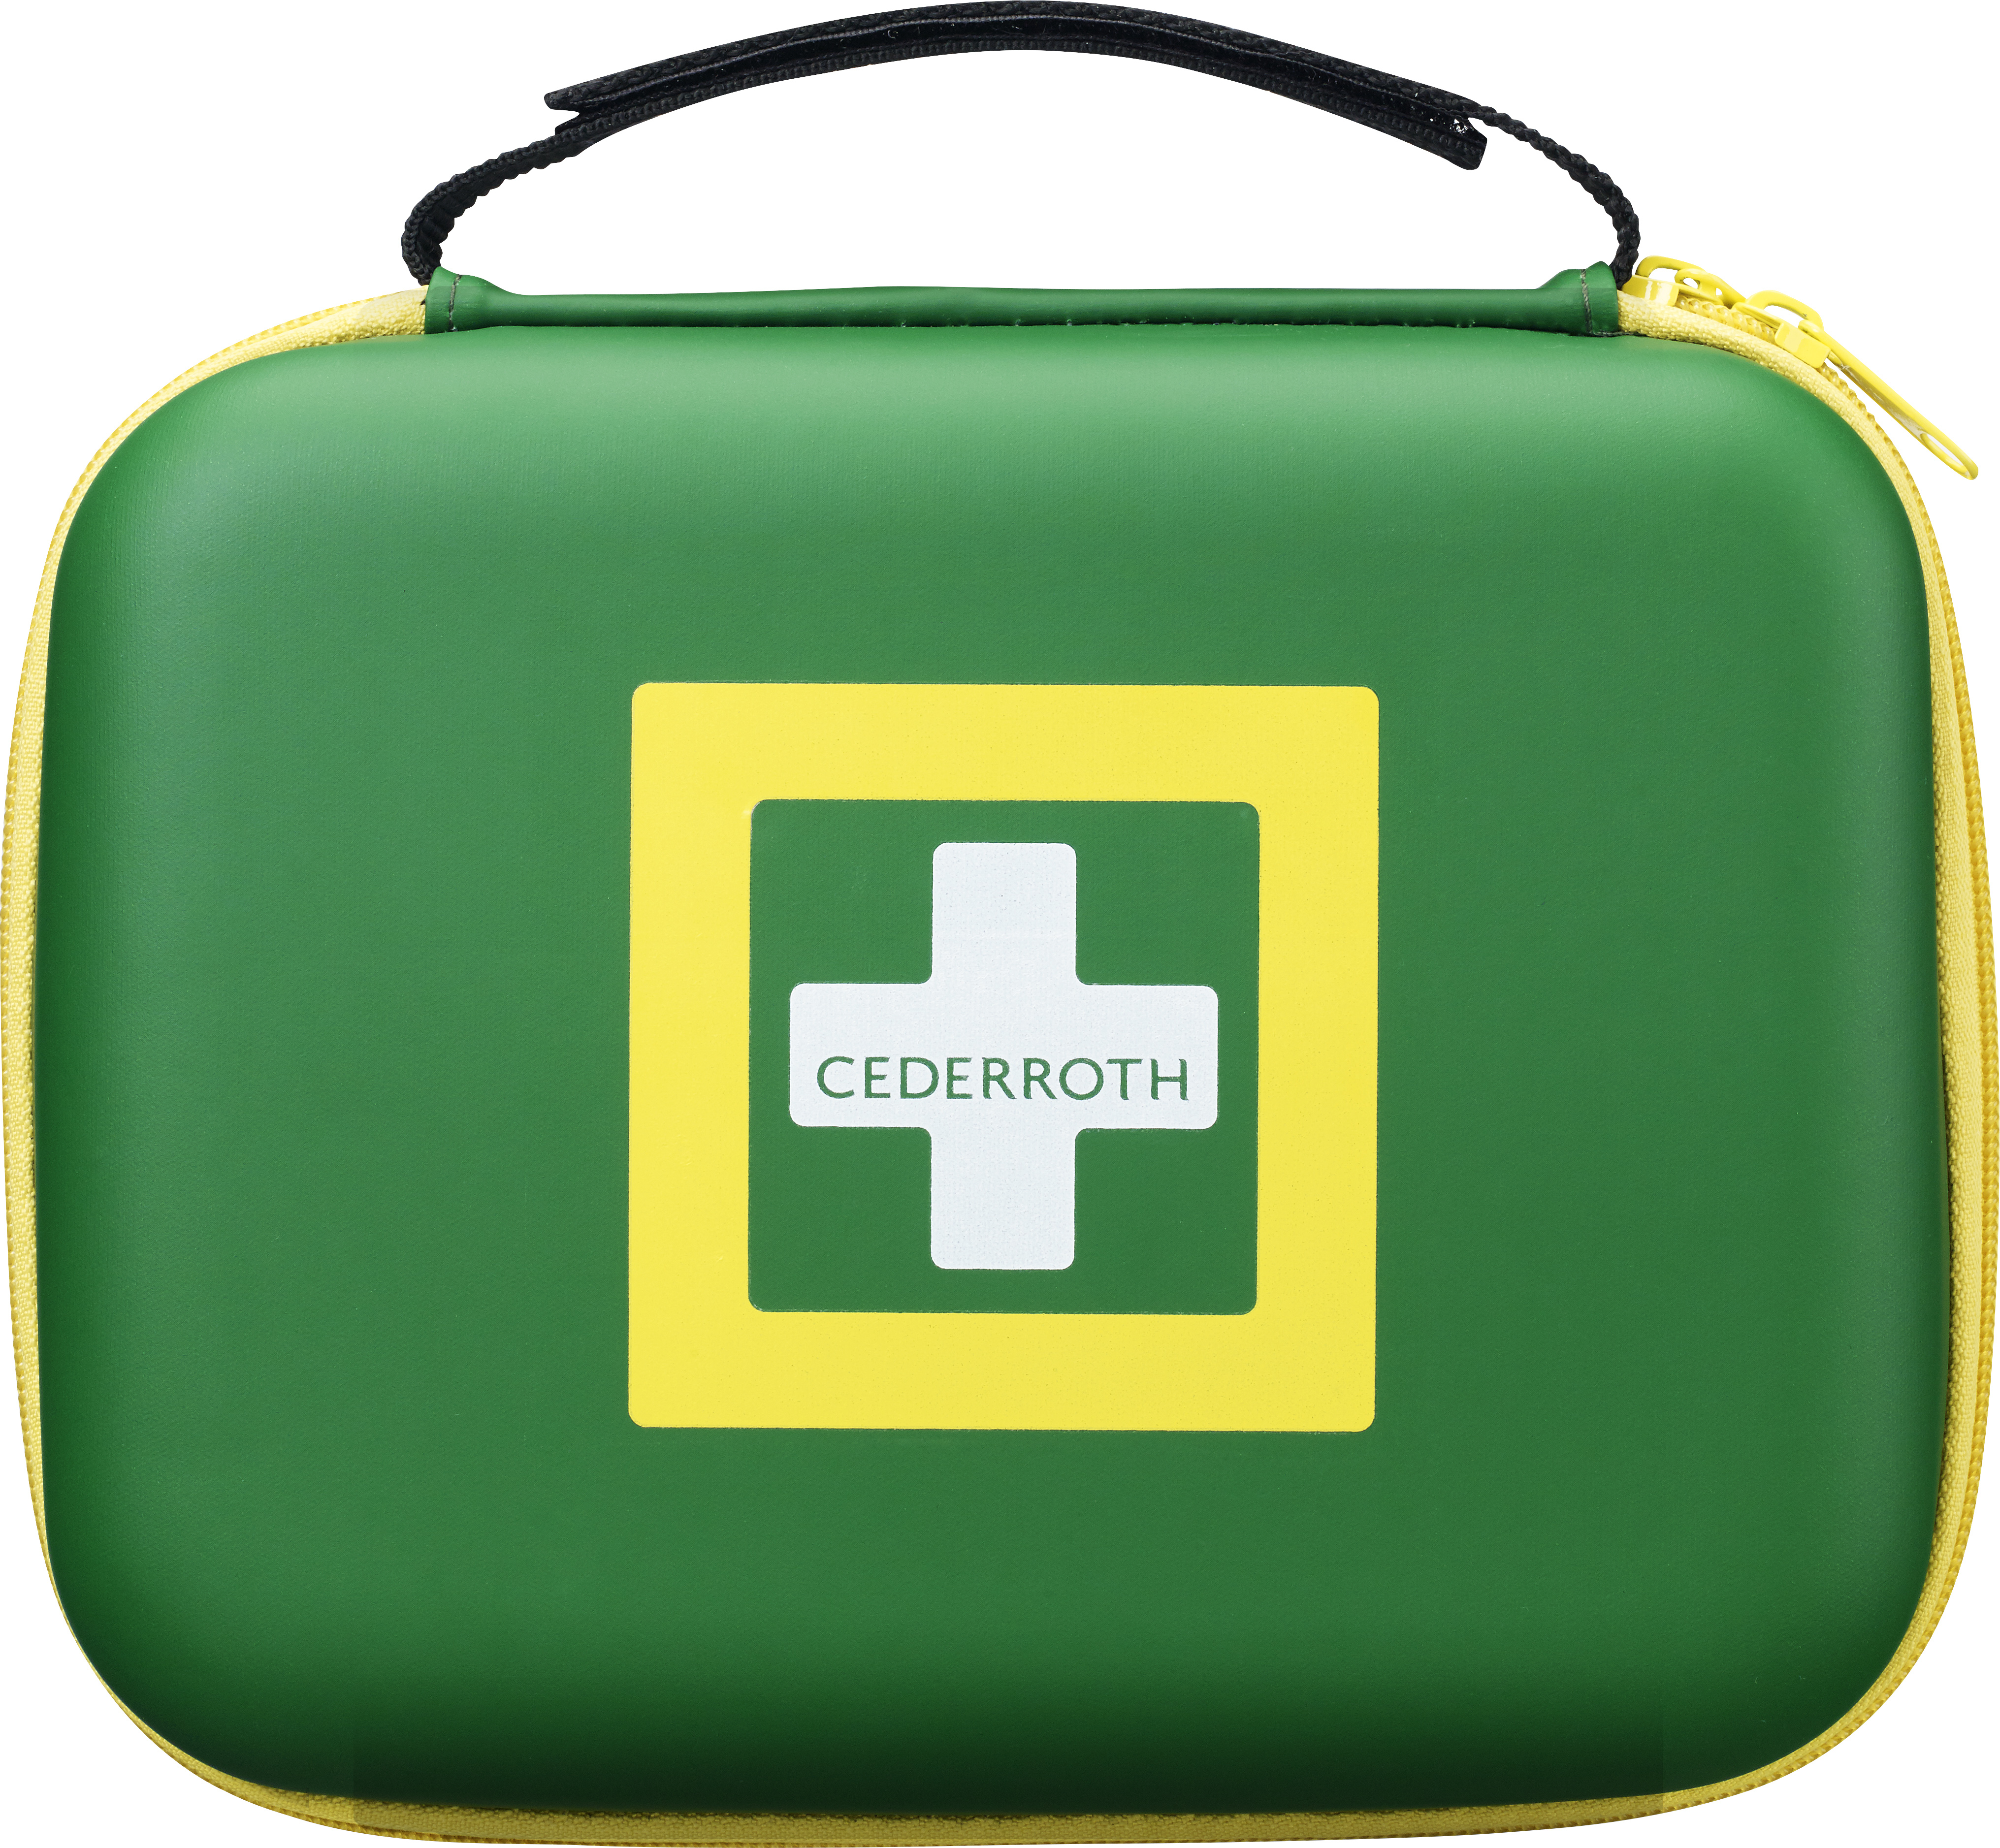 Cederroth First aid kit medium